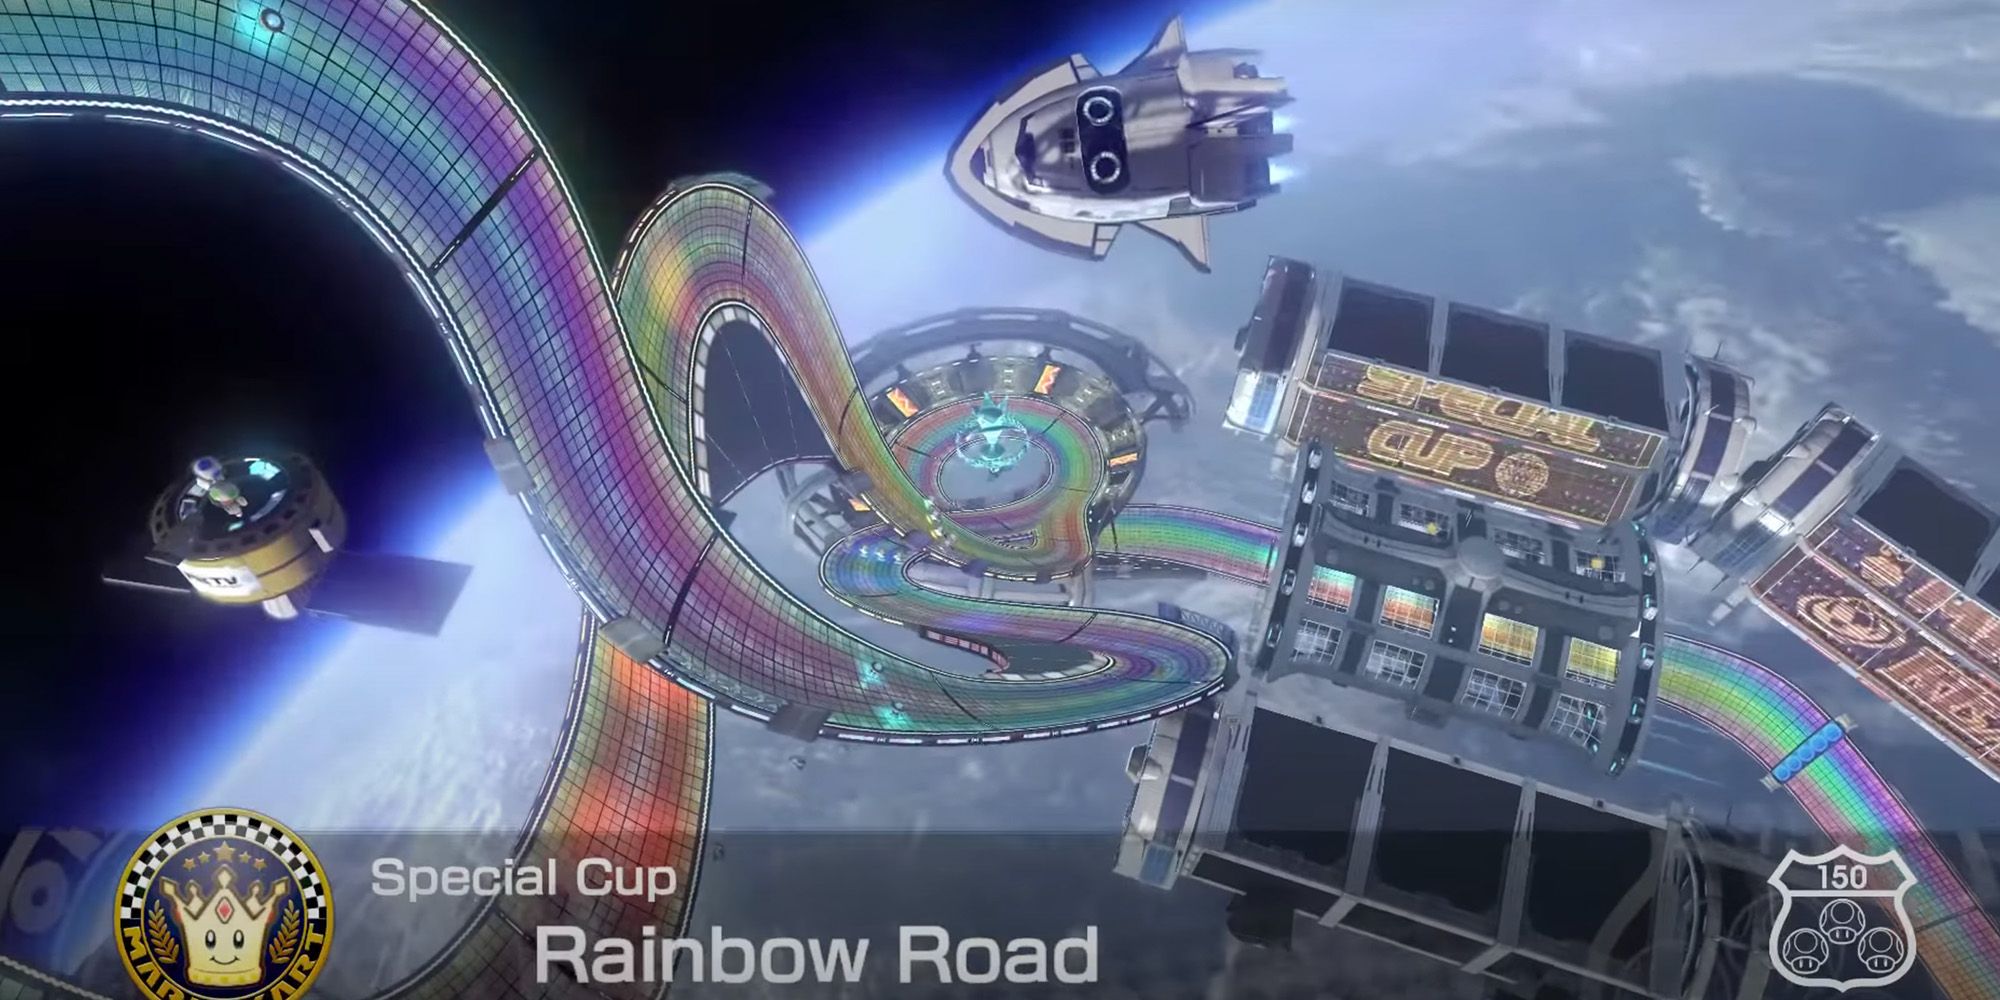 Mario Kart: Every Version Of Rainbow Road, Ranked